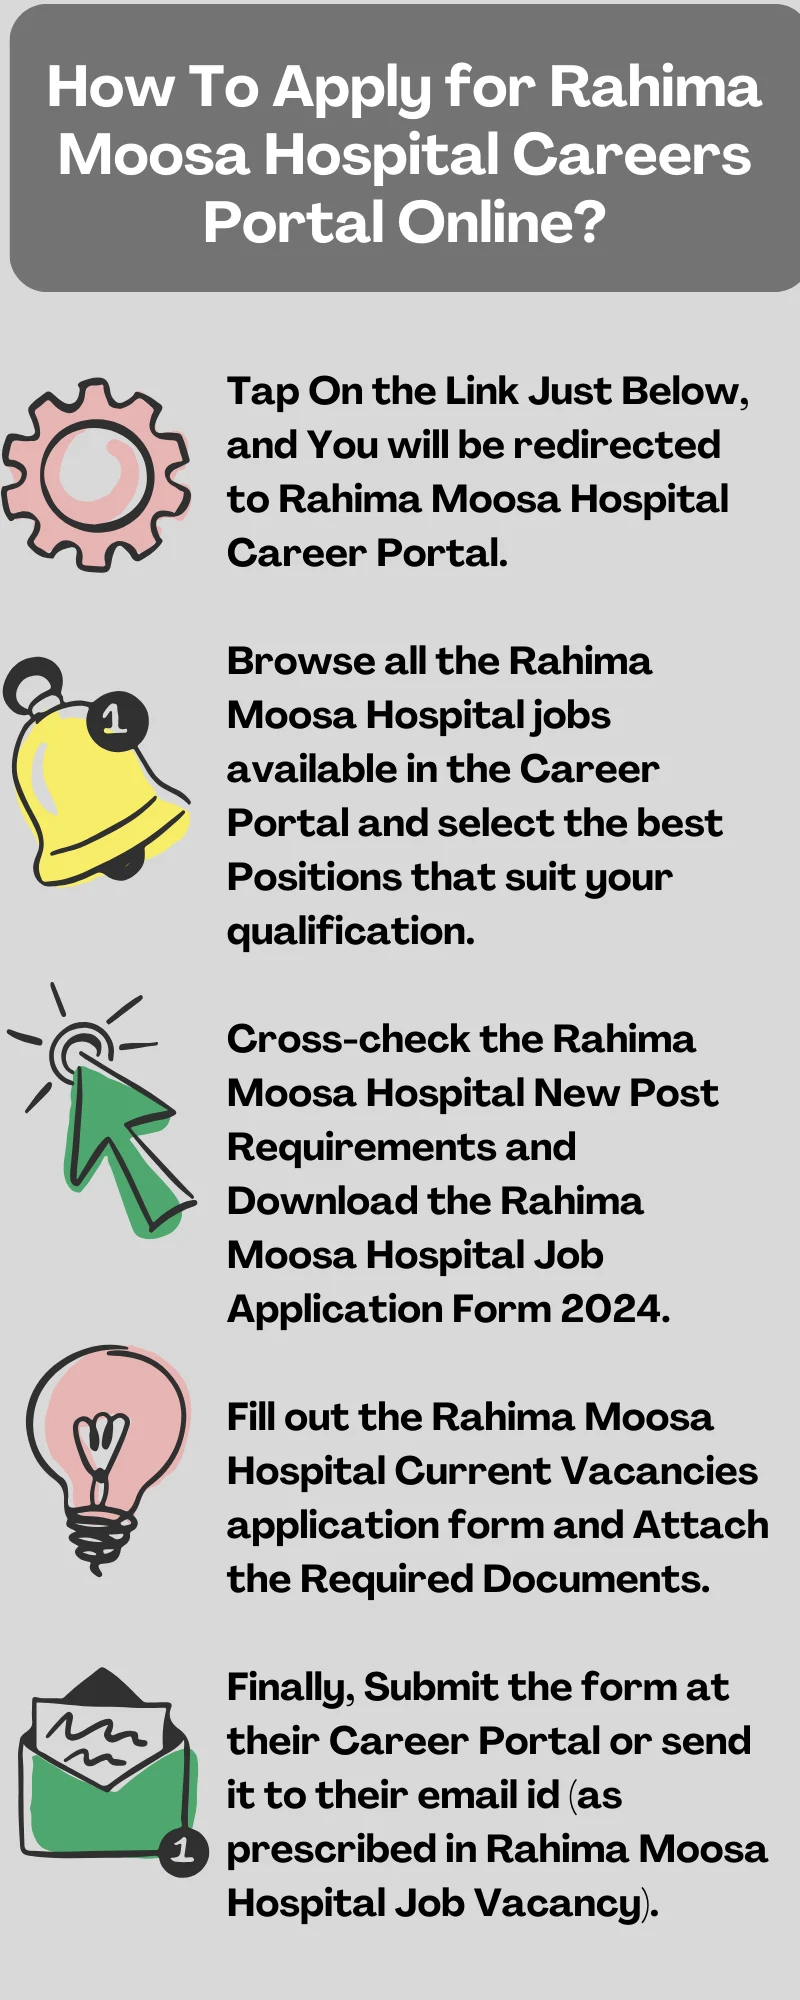 How To Apply for Rahima Moosa Hospital Careers Portal Online?